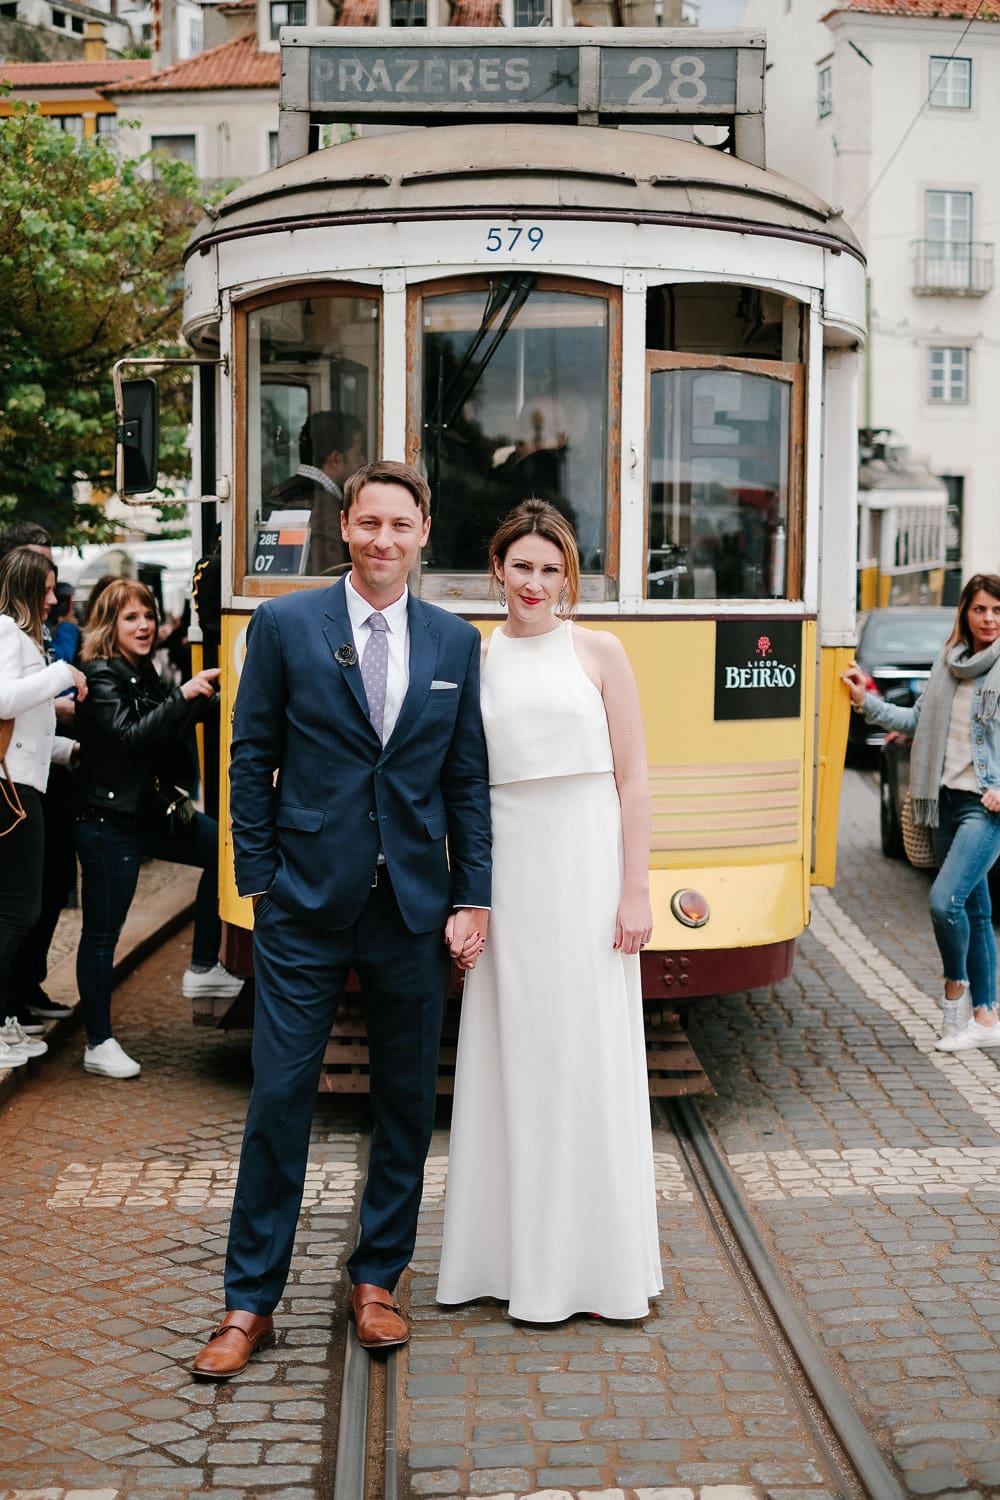 Wedding portraits for a couple in front of a Tram in Lisbon #tram #Lisbon #elopement #honeymoon #portugalwedding